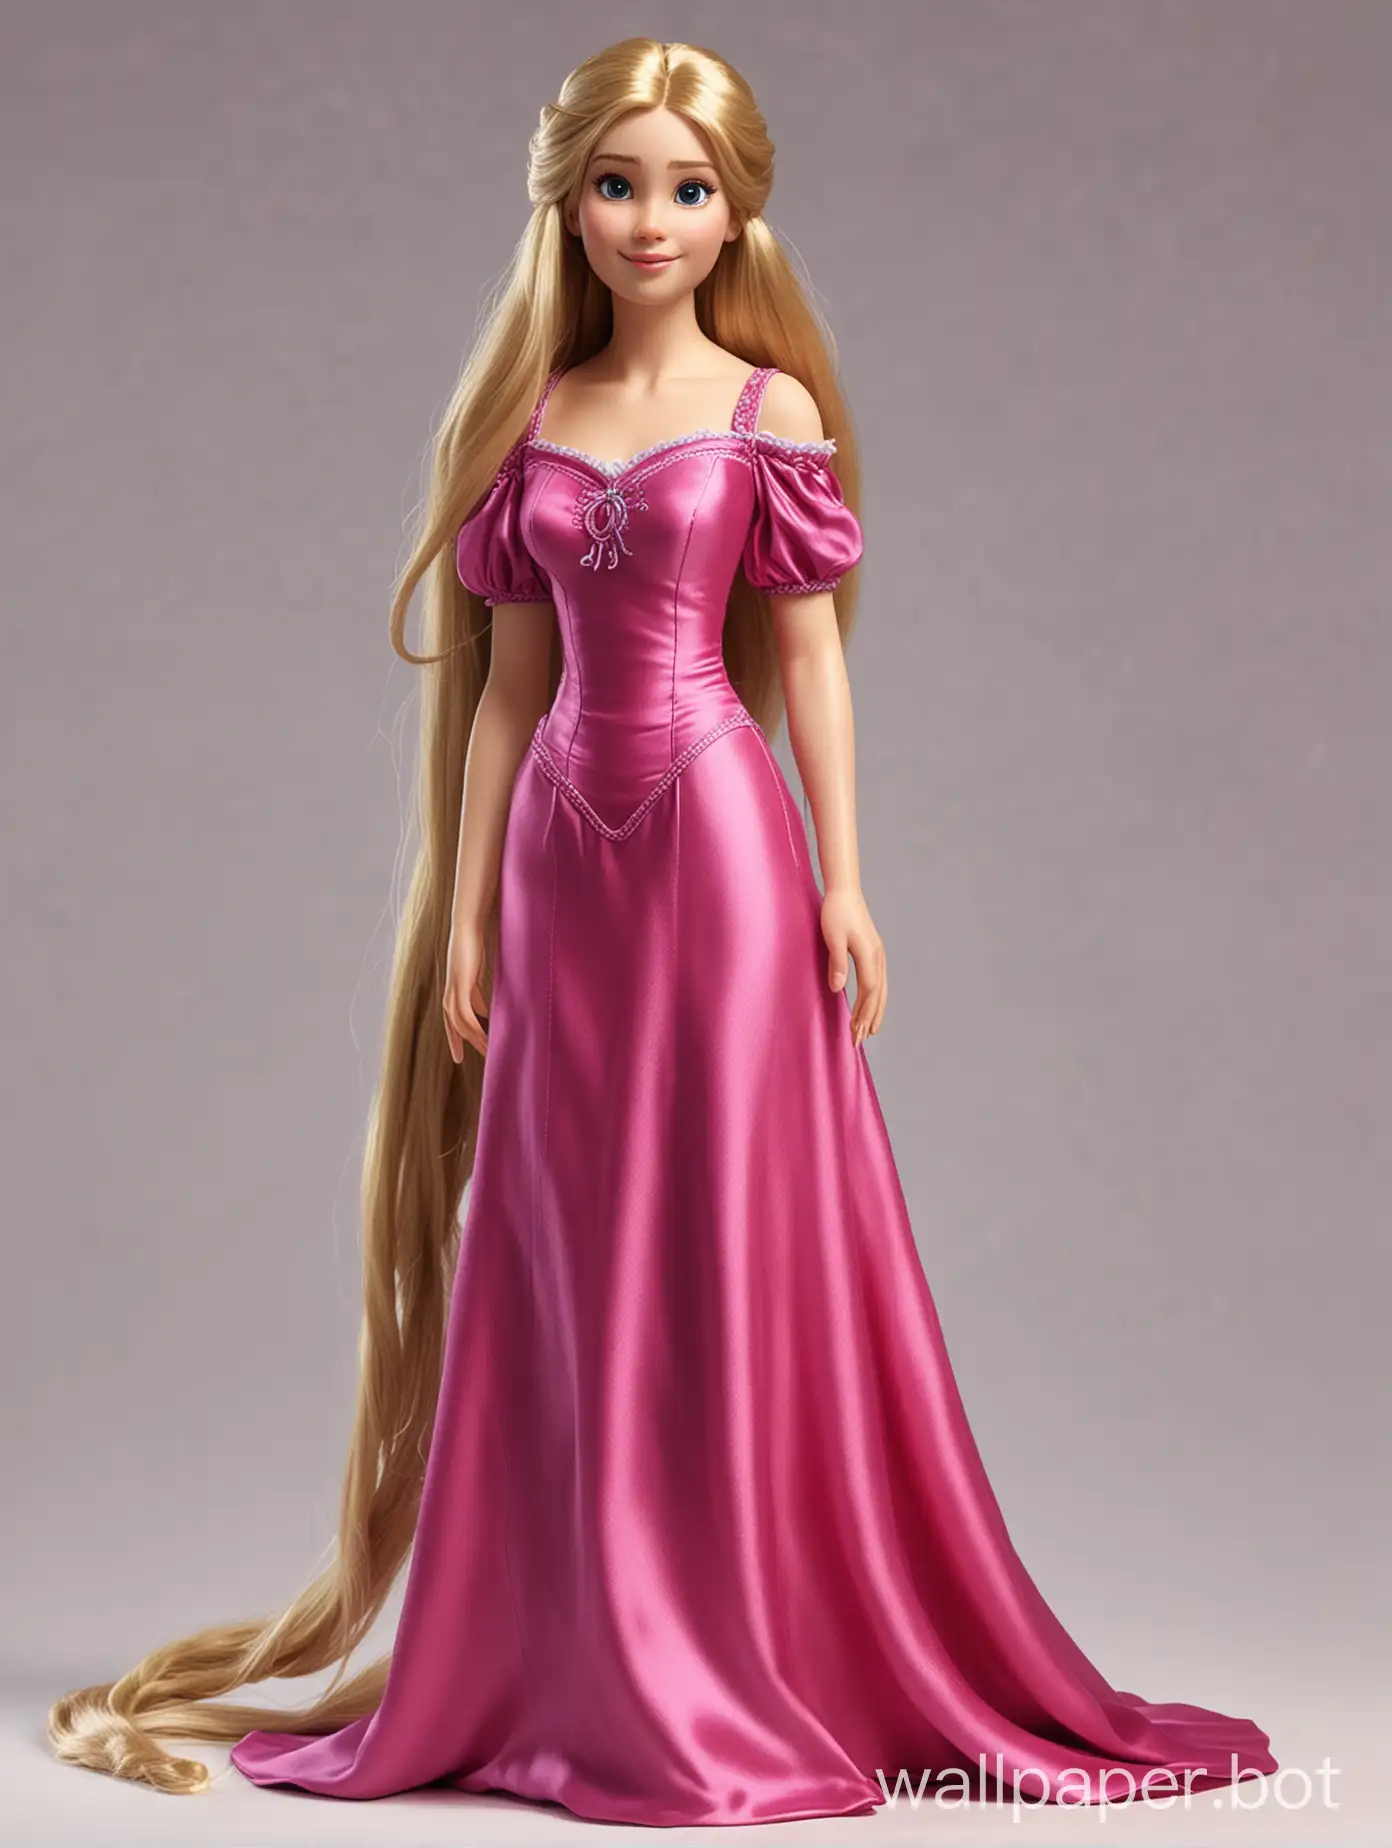 Realistic Rapunzel with long hair in fuchsia pink silk slip dress